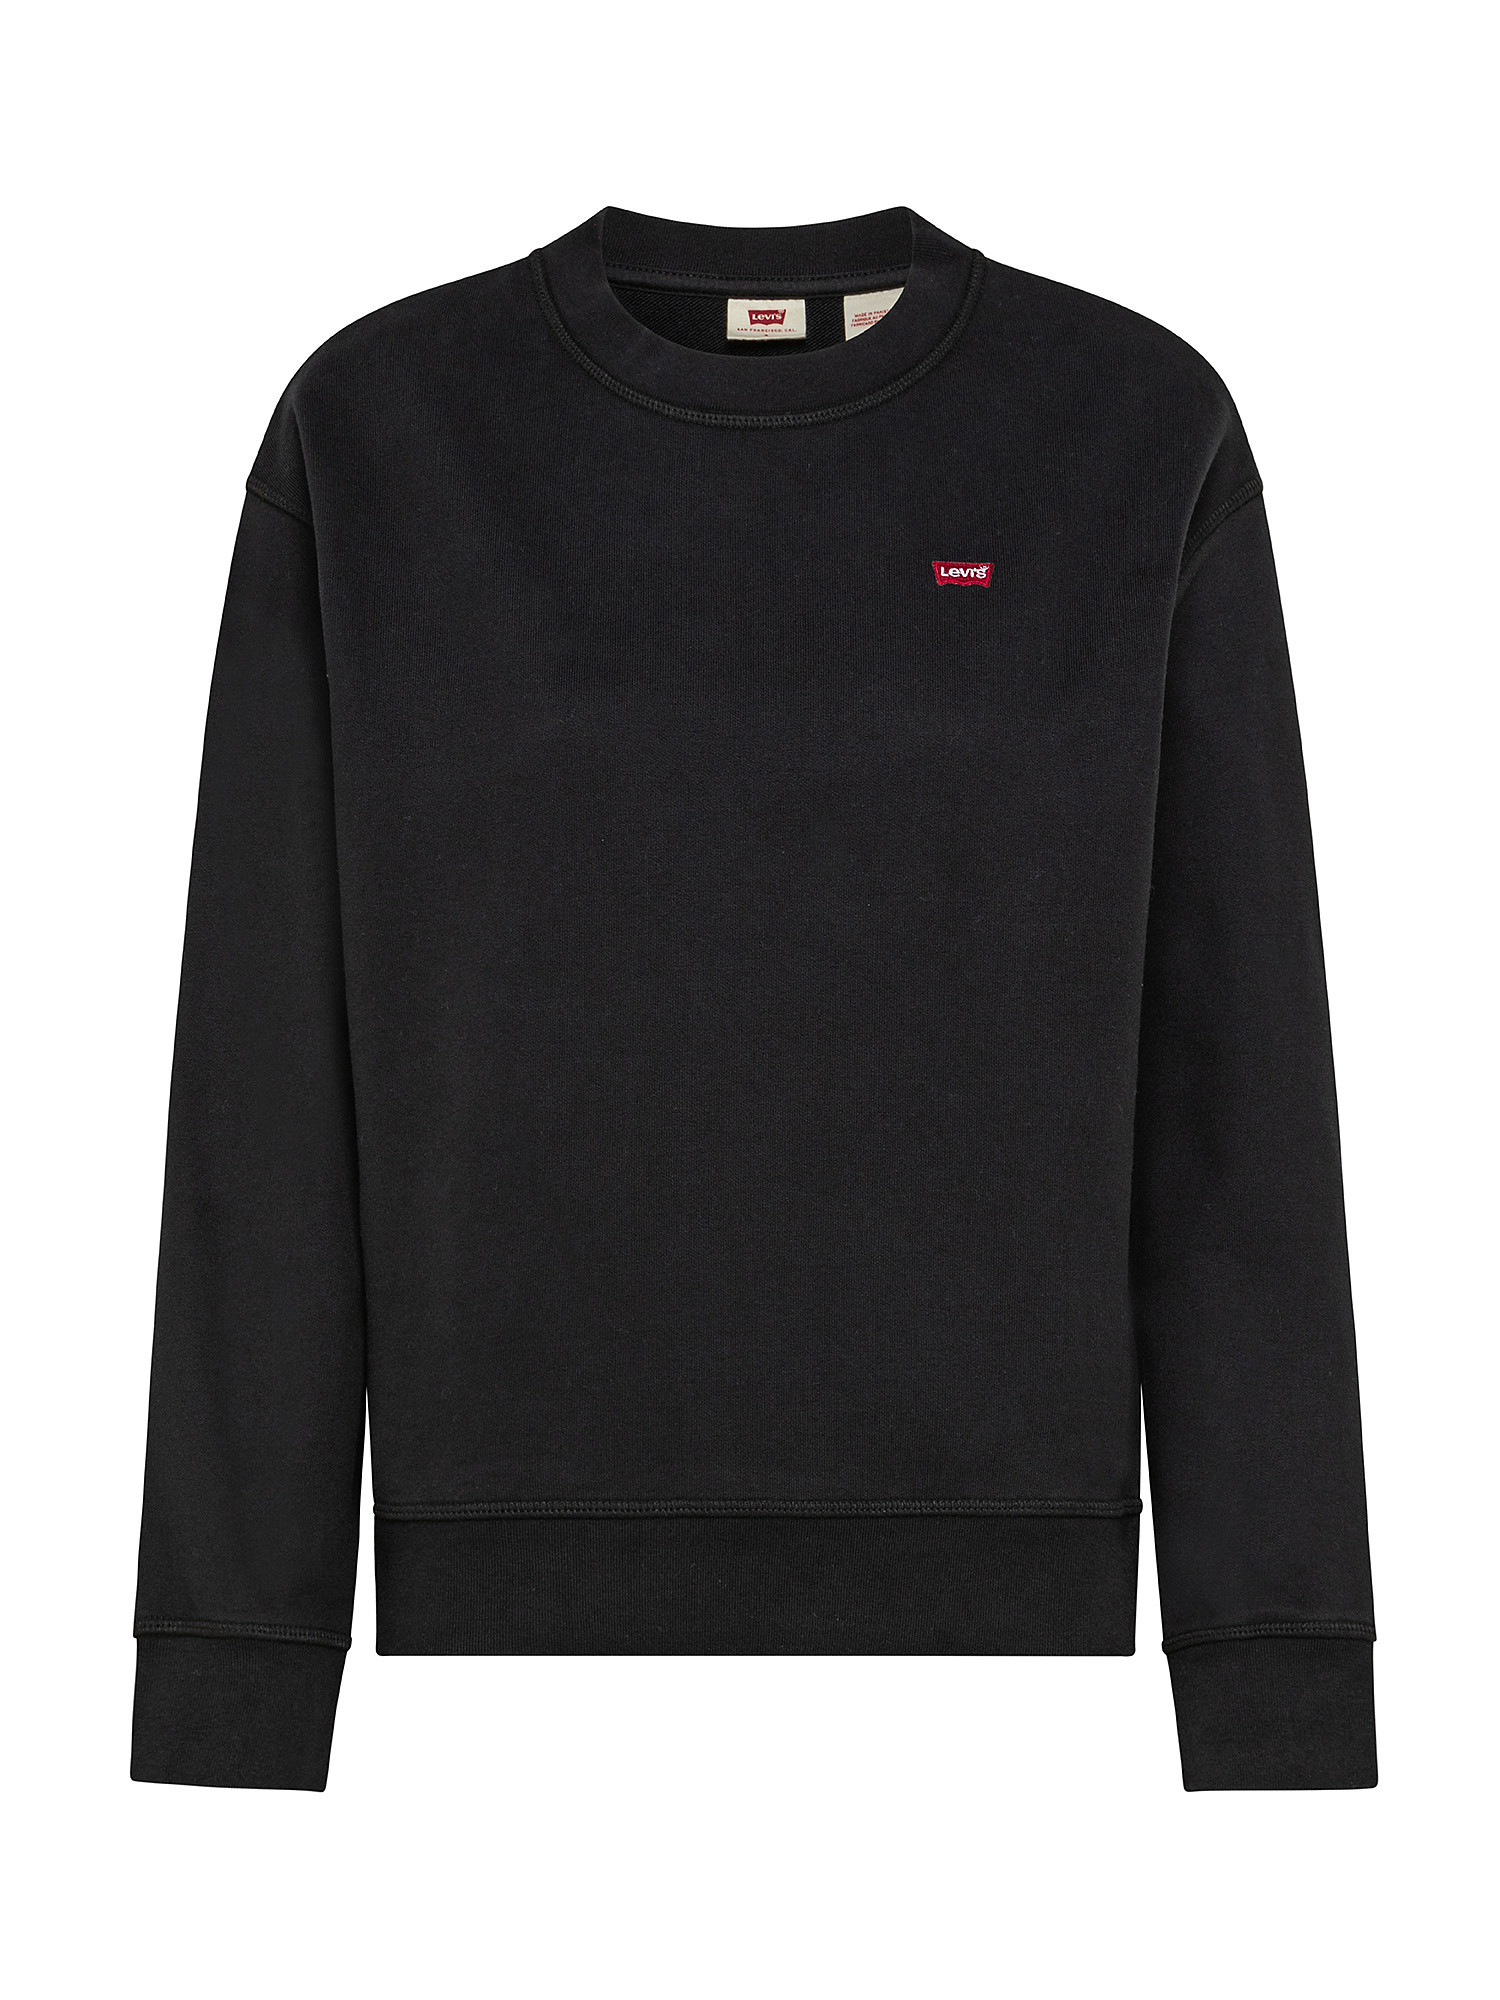 Crewneck sweatshirt, Black, large image number 0